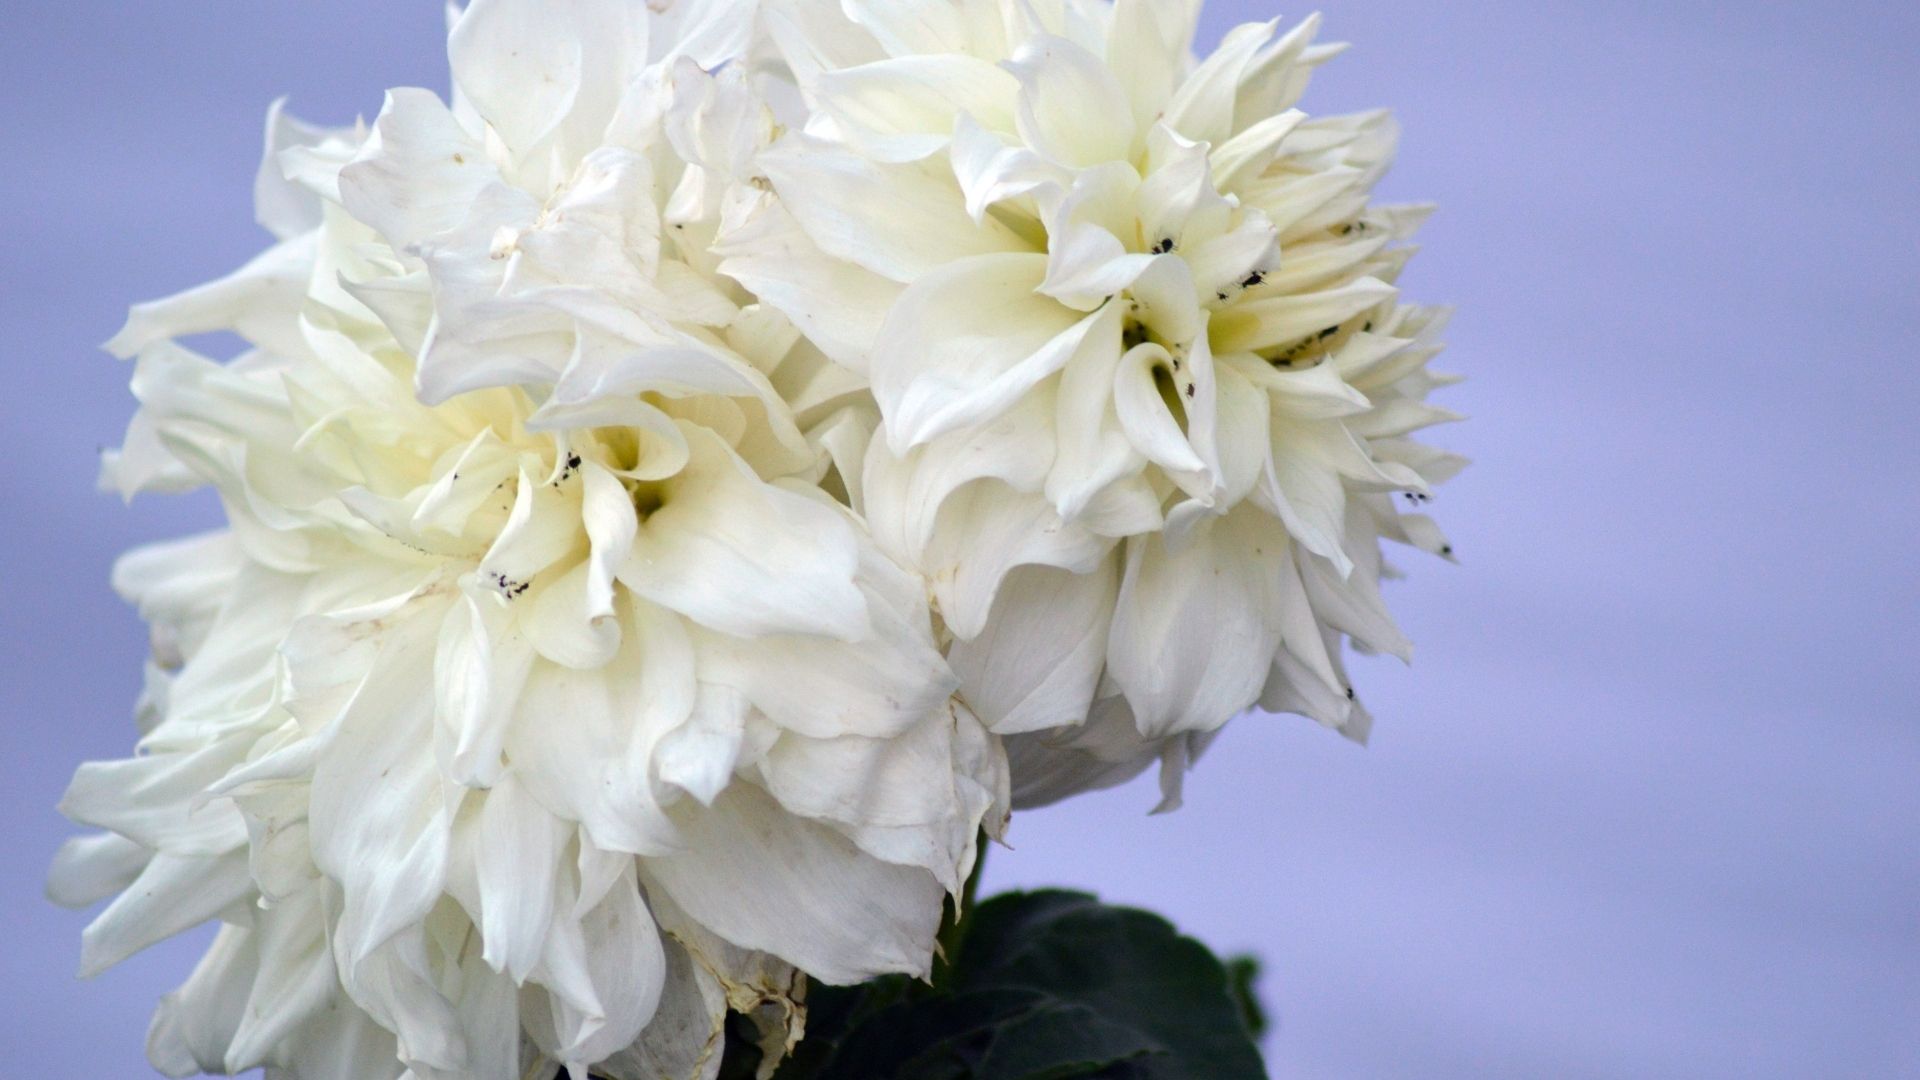 White Carnation Flowers